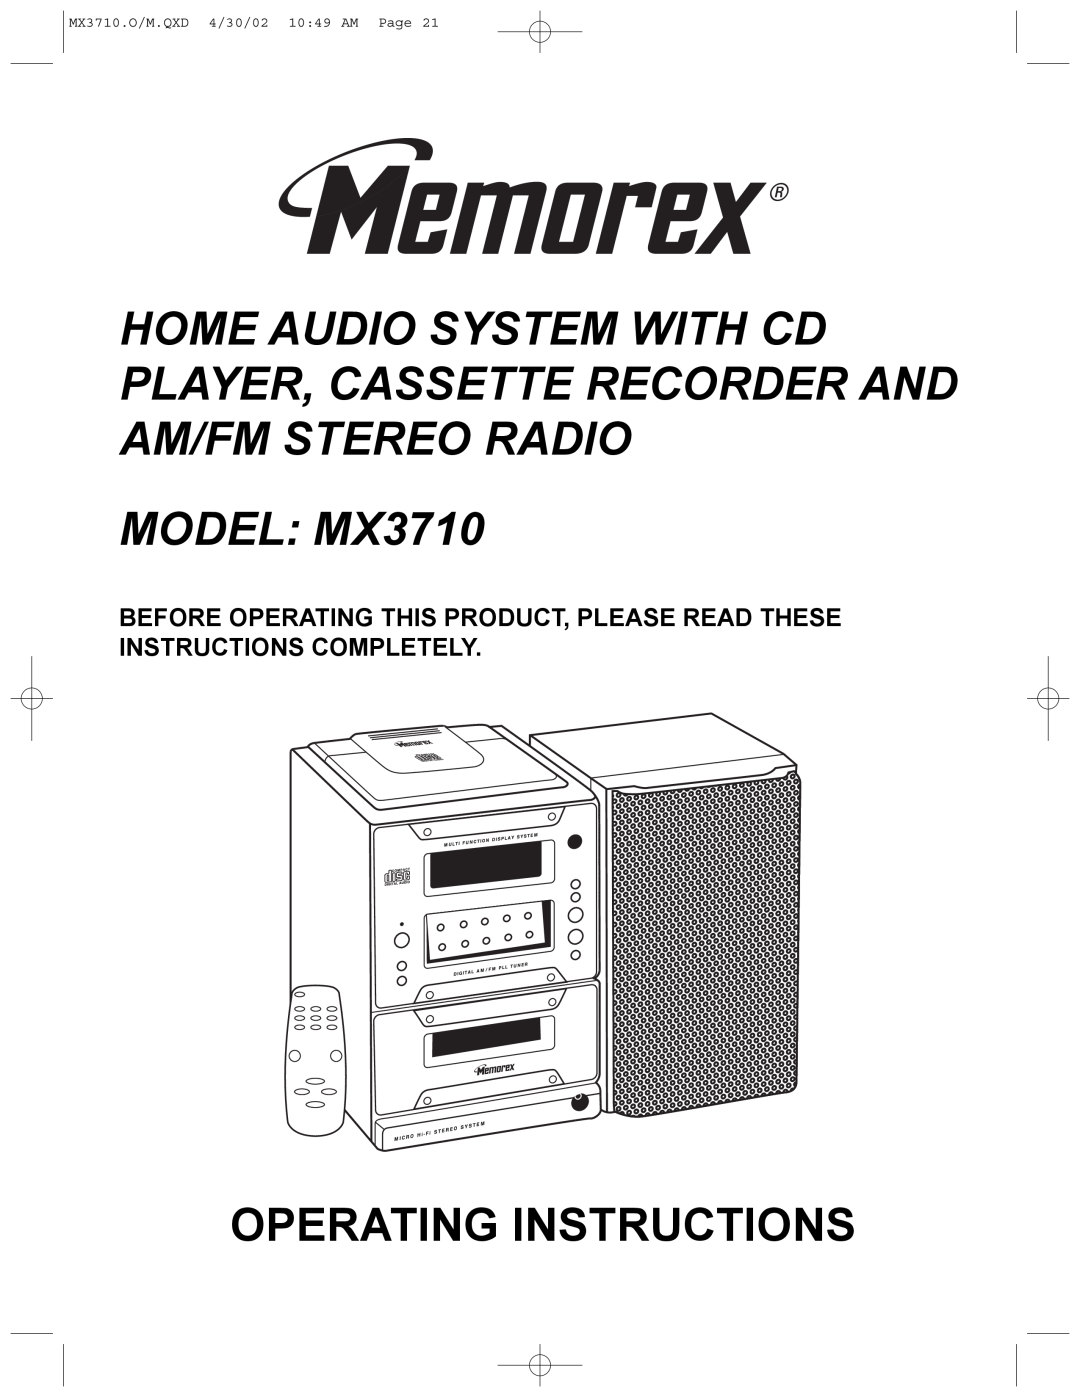 Memorex manual MODEL MX3710, Operating Instructions, MX3710.O/M.QXD 4/30/02 10 49 AM Page 